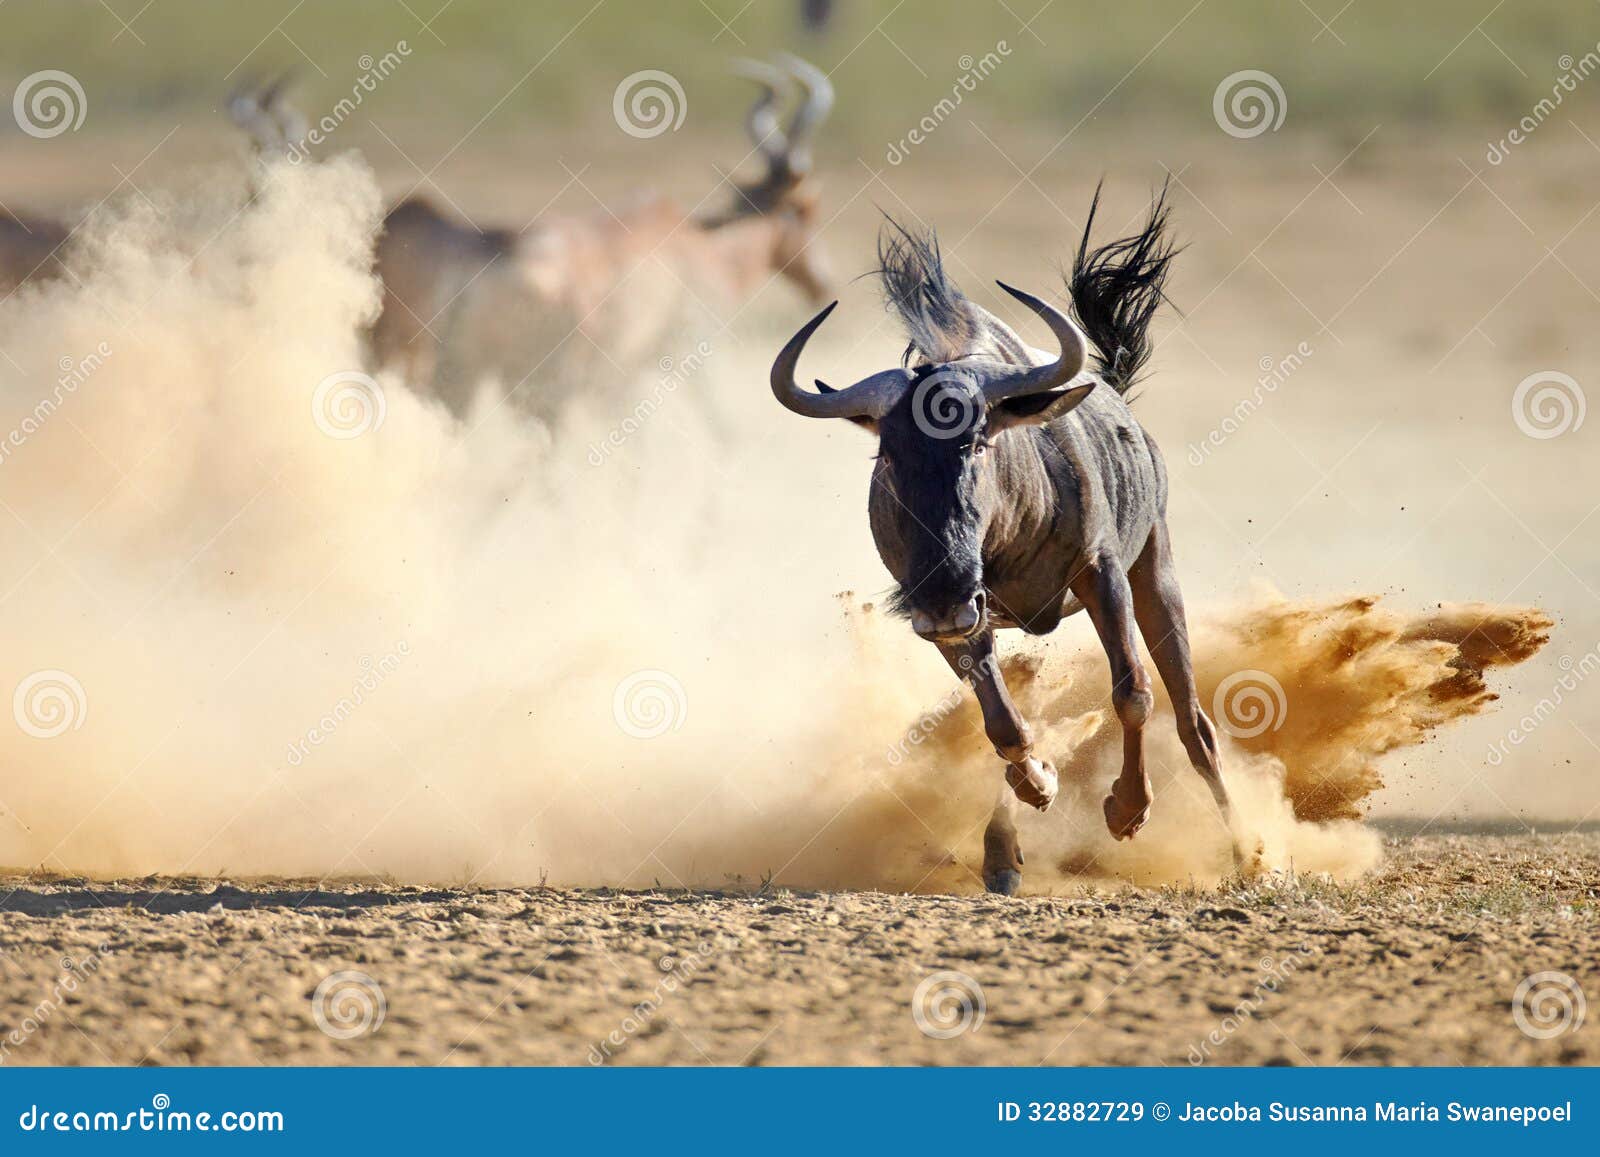 blue wildebeest running on dusty plains